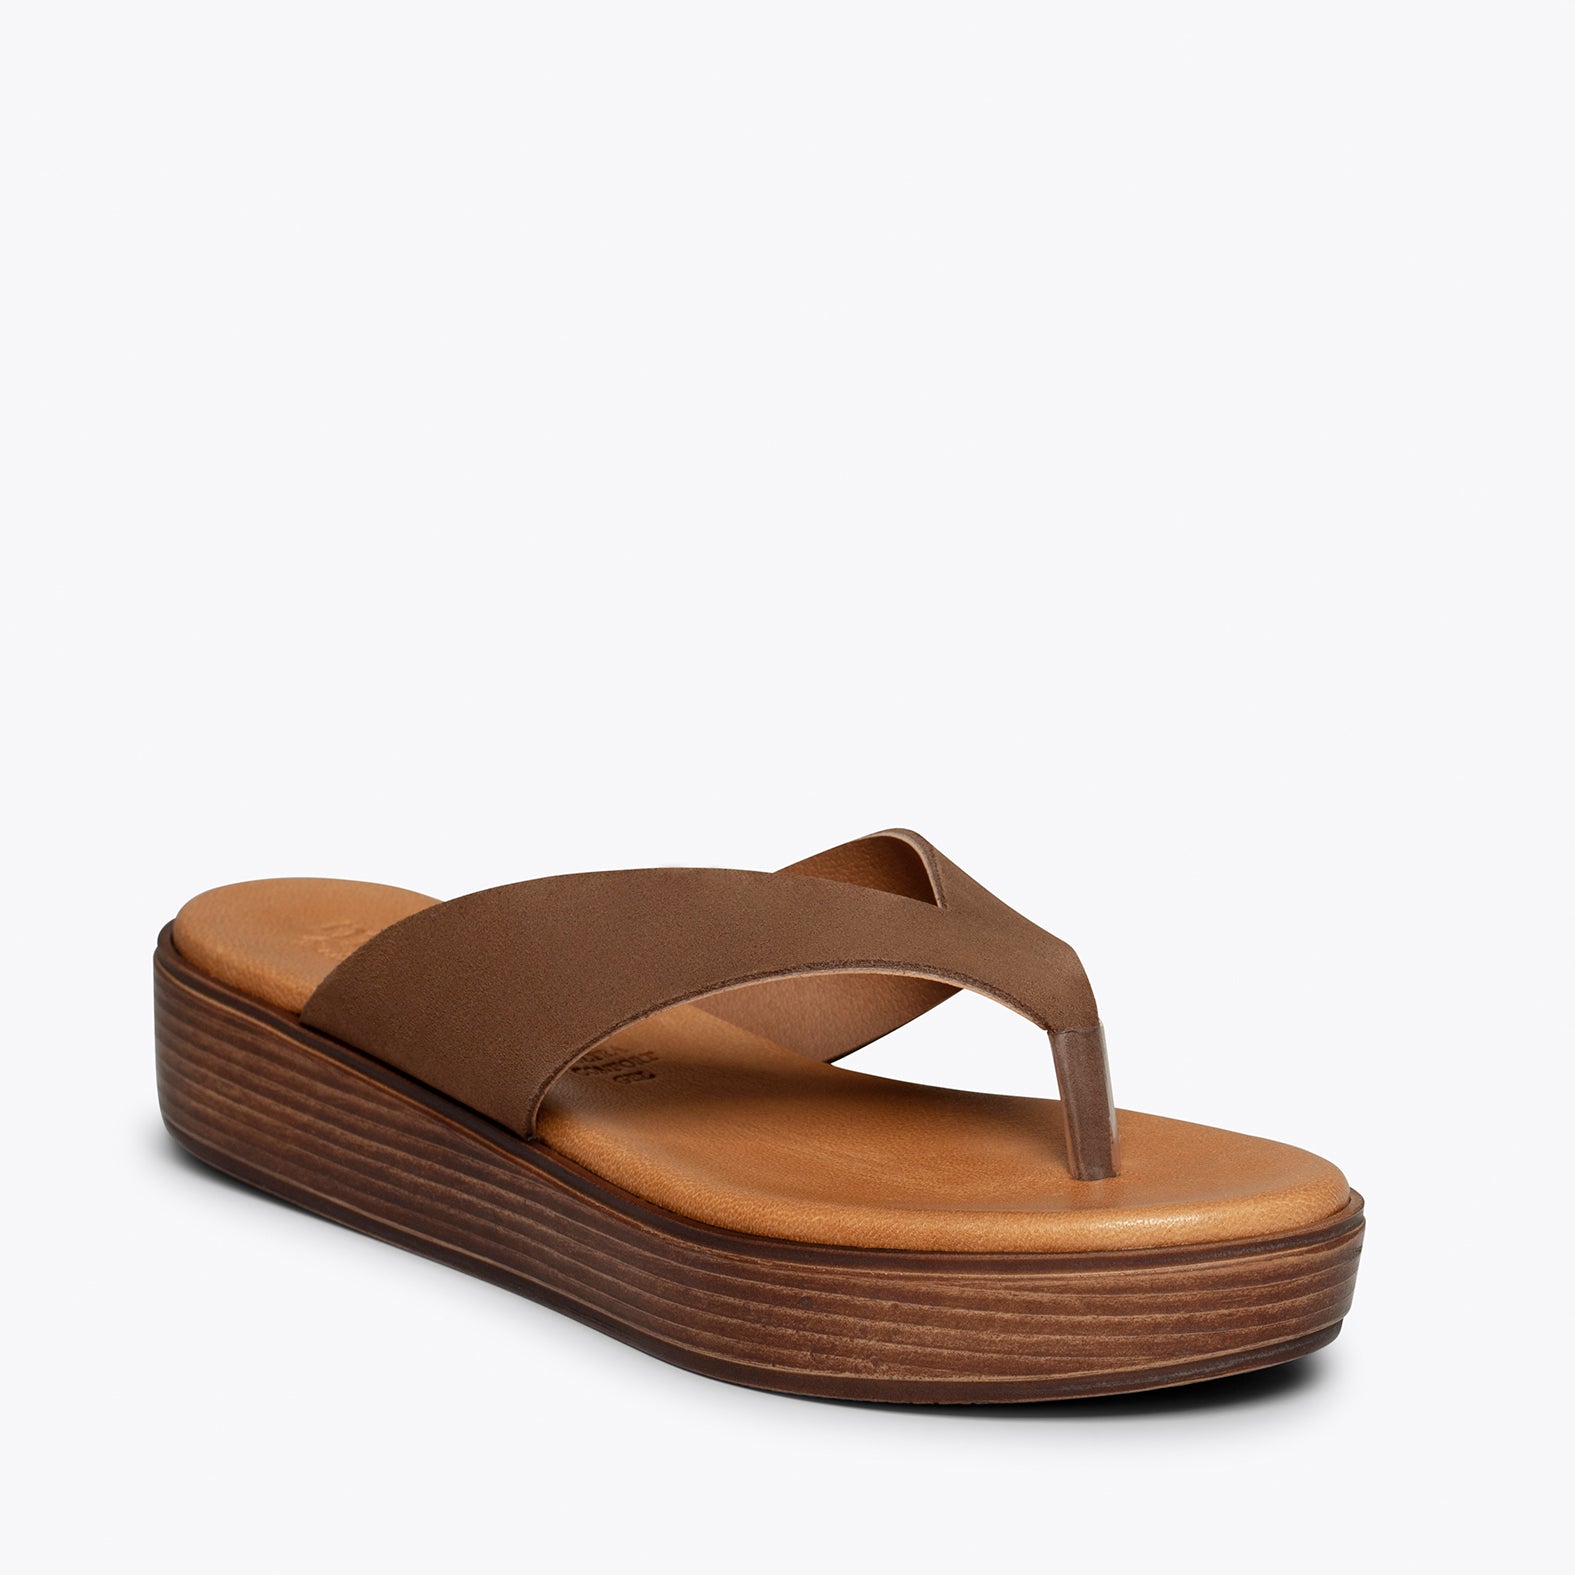 BASIC – BROWN leather flip flops